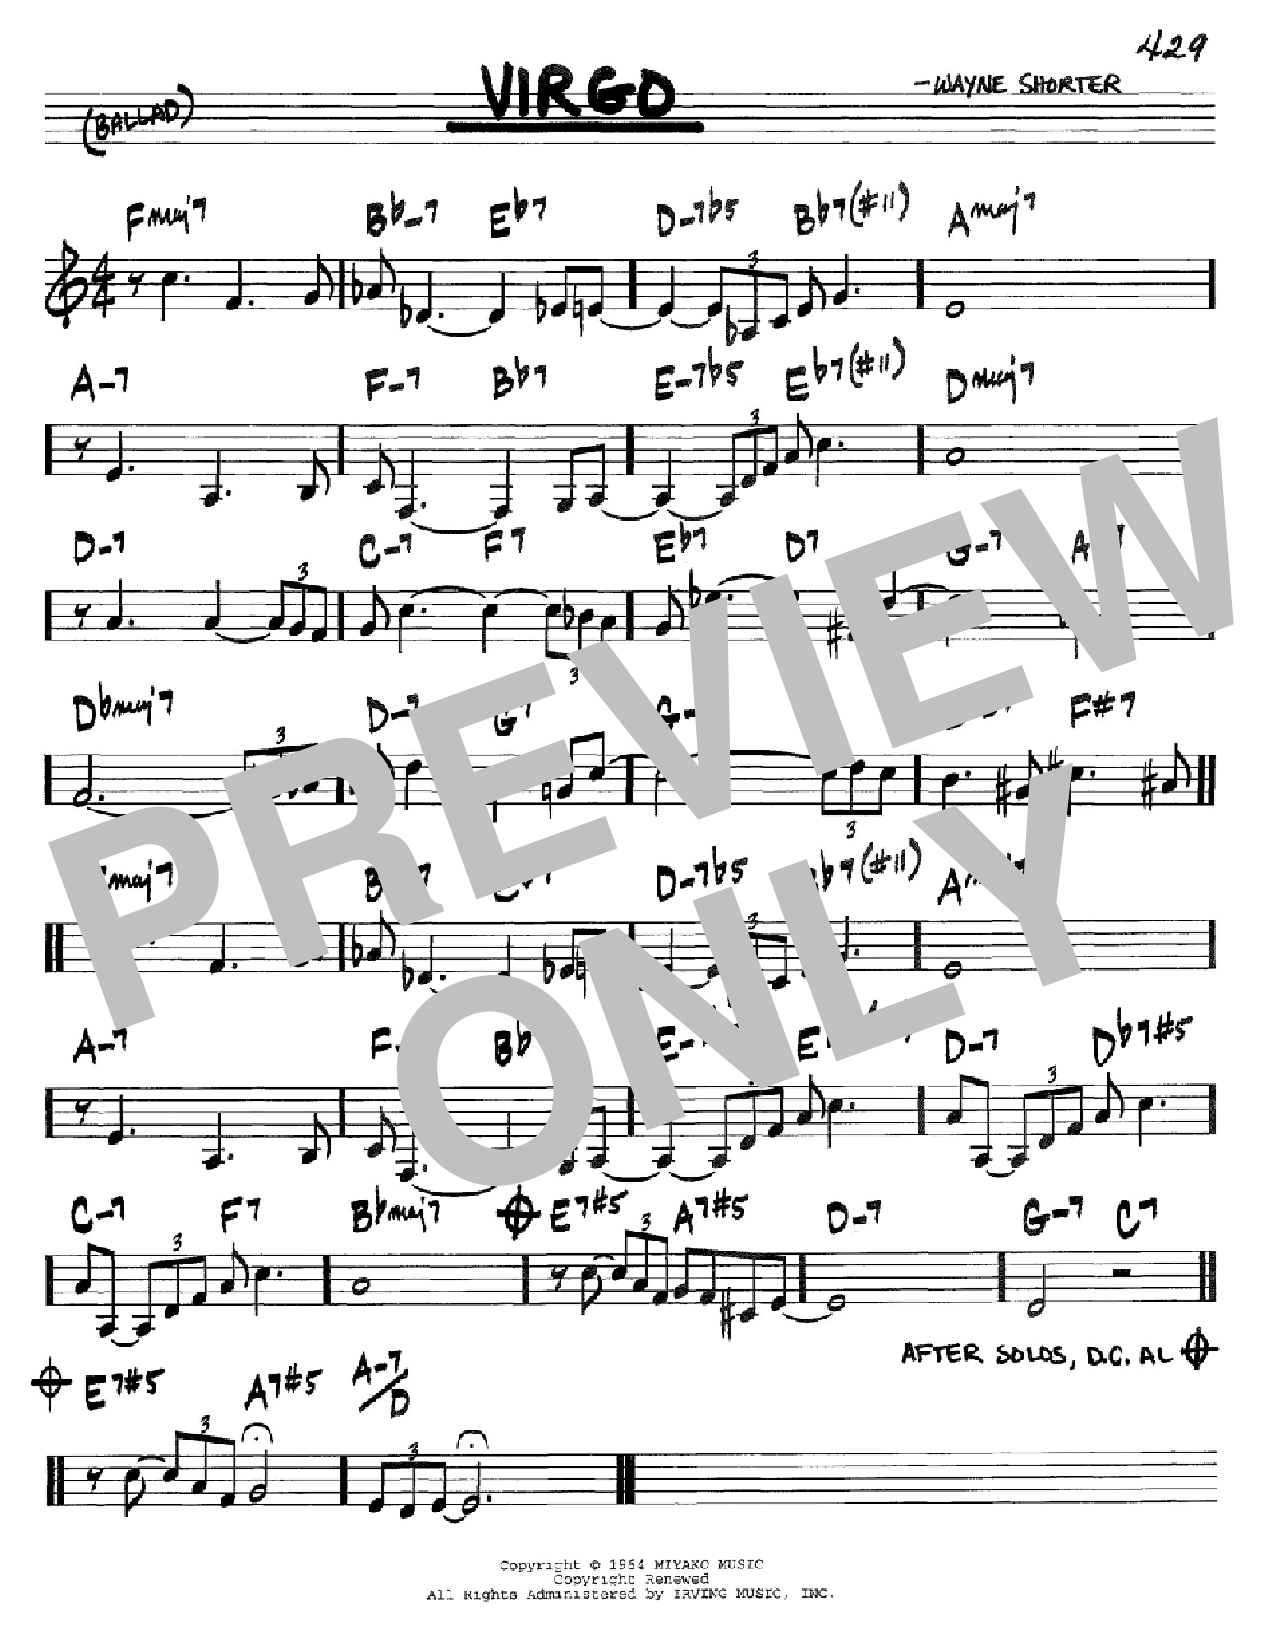 Wayne Shorter Virgo Sheet Music Notes & Chords for Tenor Sax Transcription - Download or Print PDF